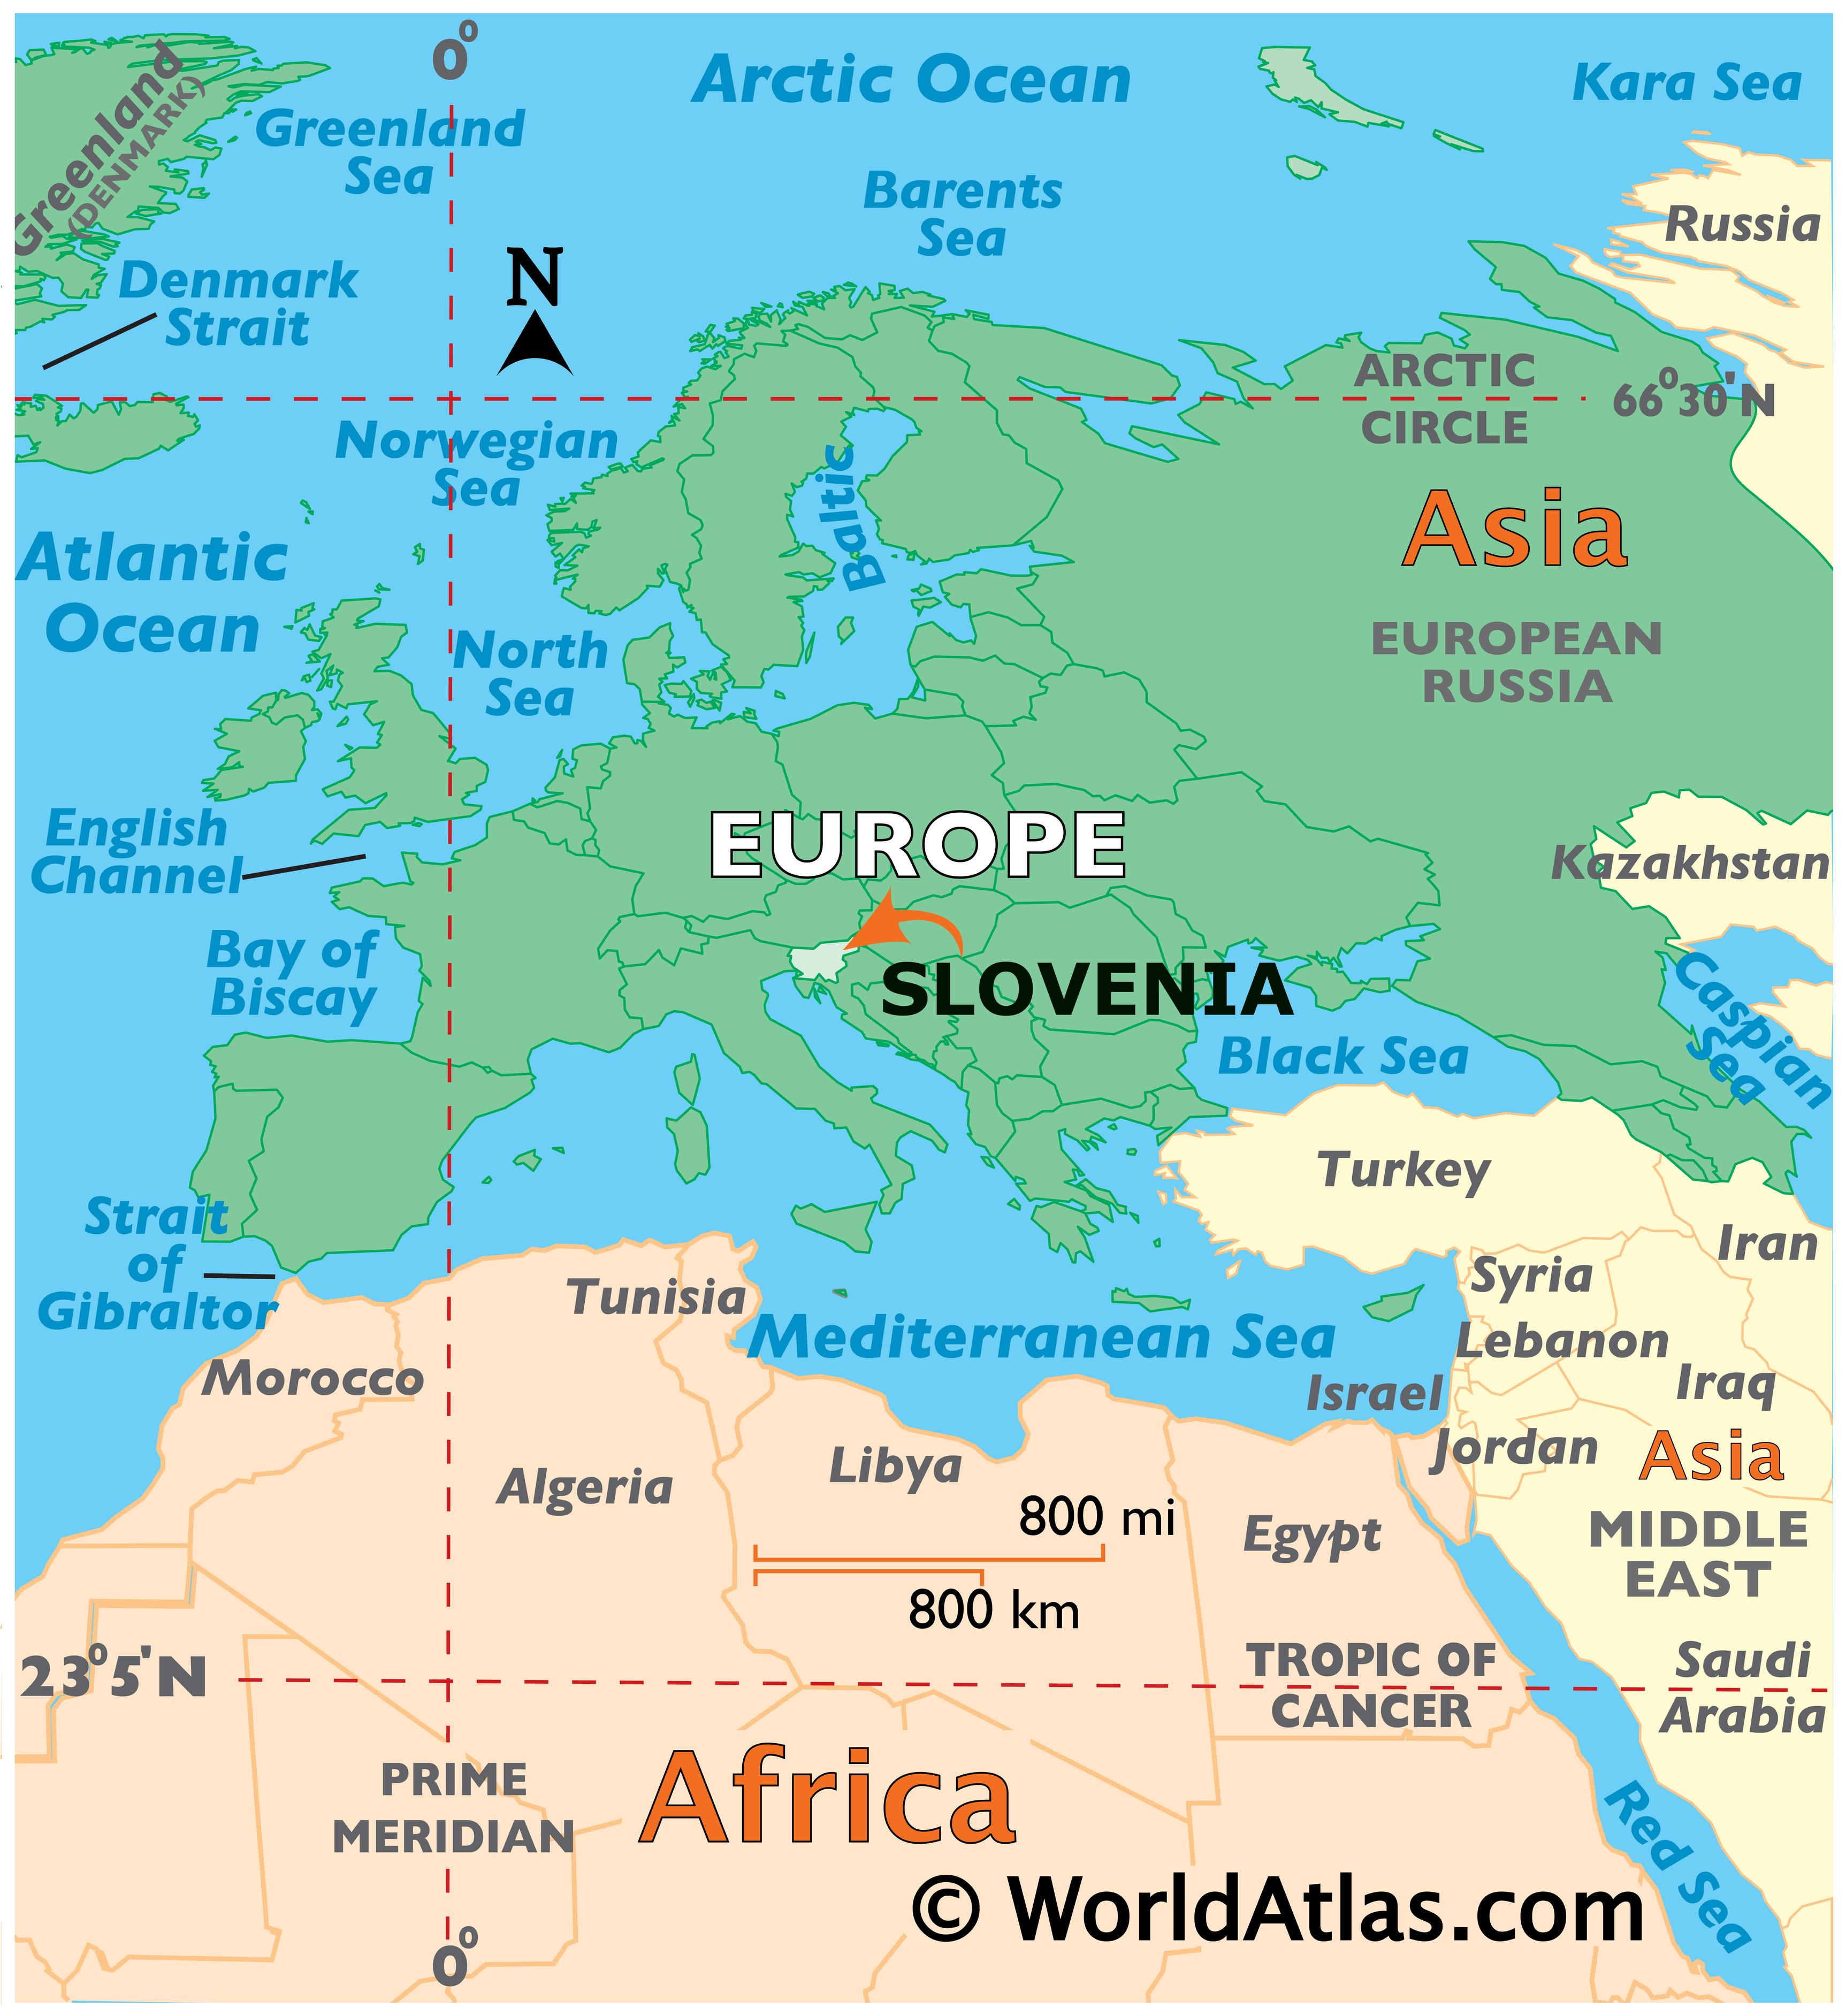 Slovenia Map Geography Of Slovenia Map Of Slovenia